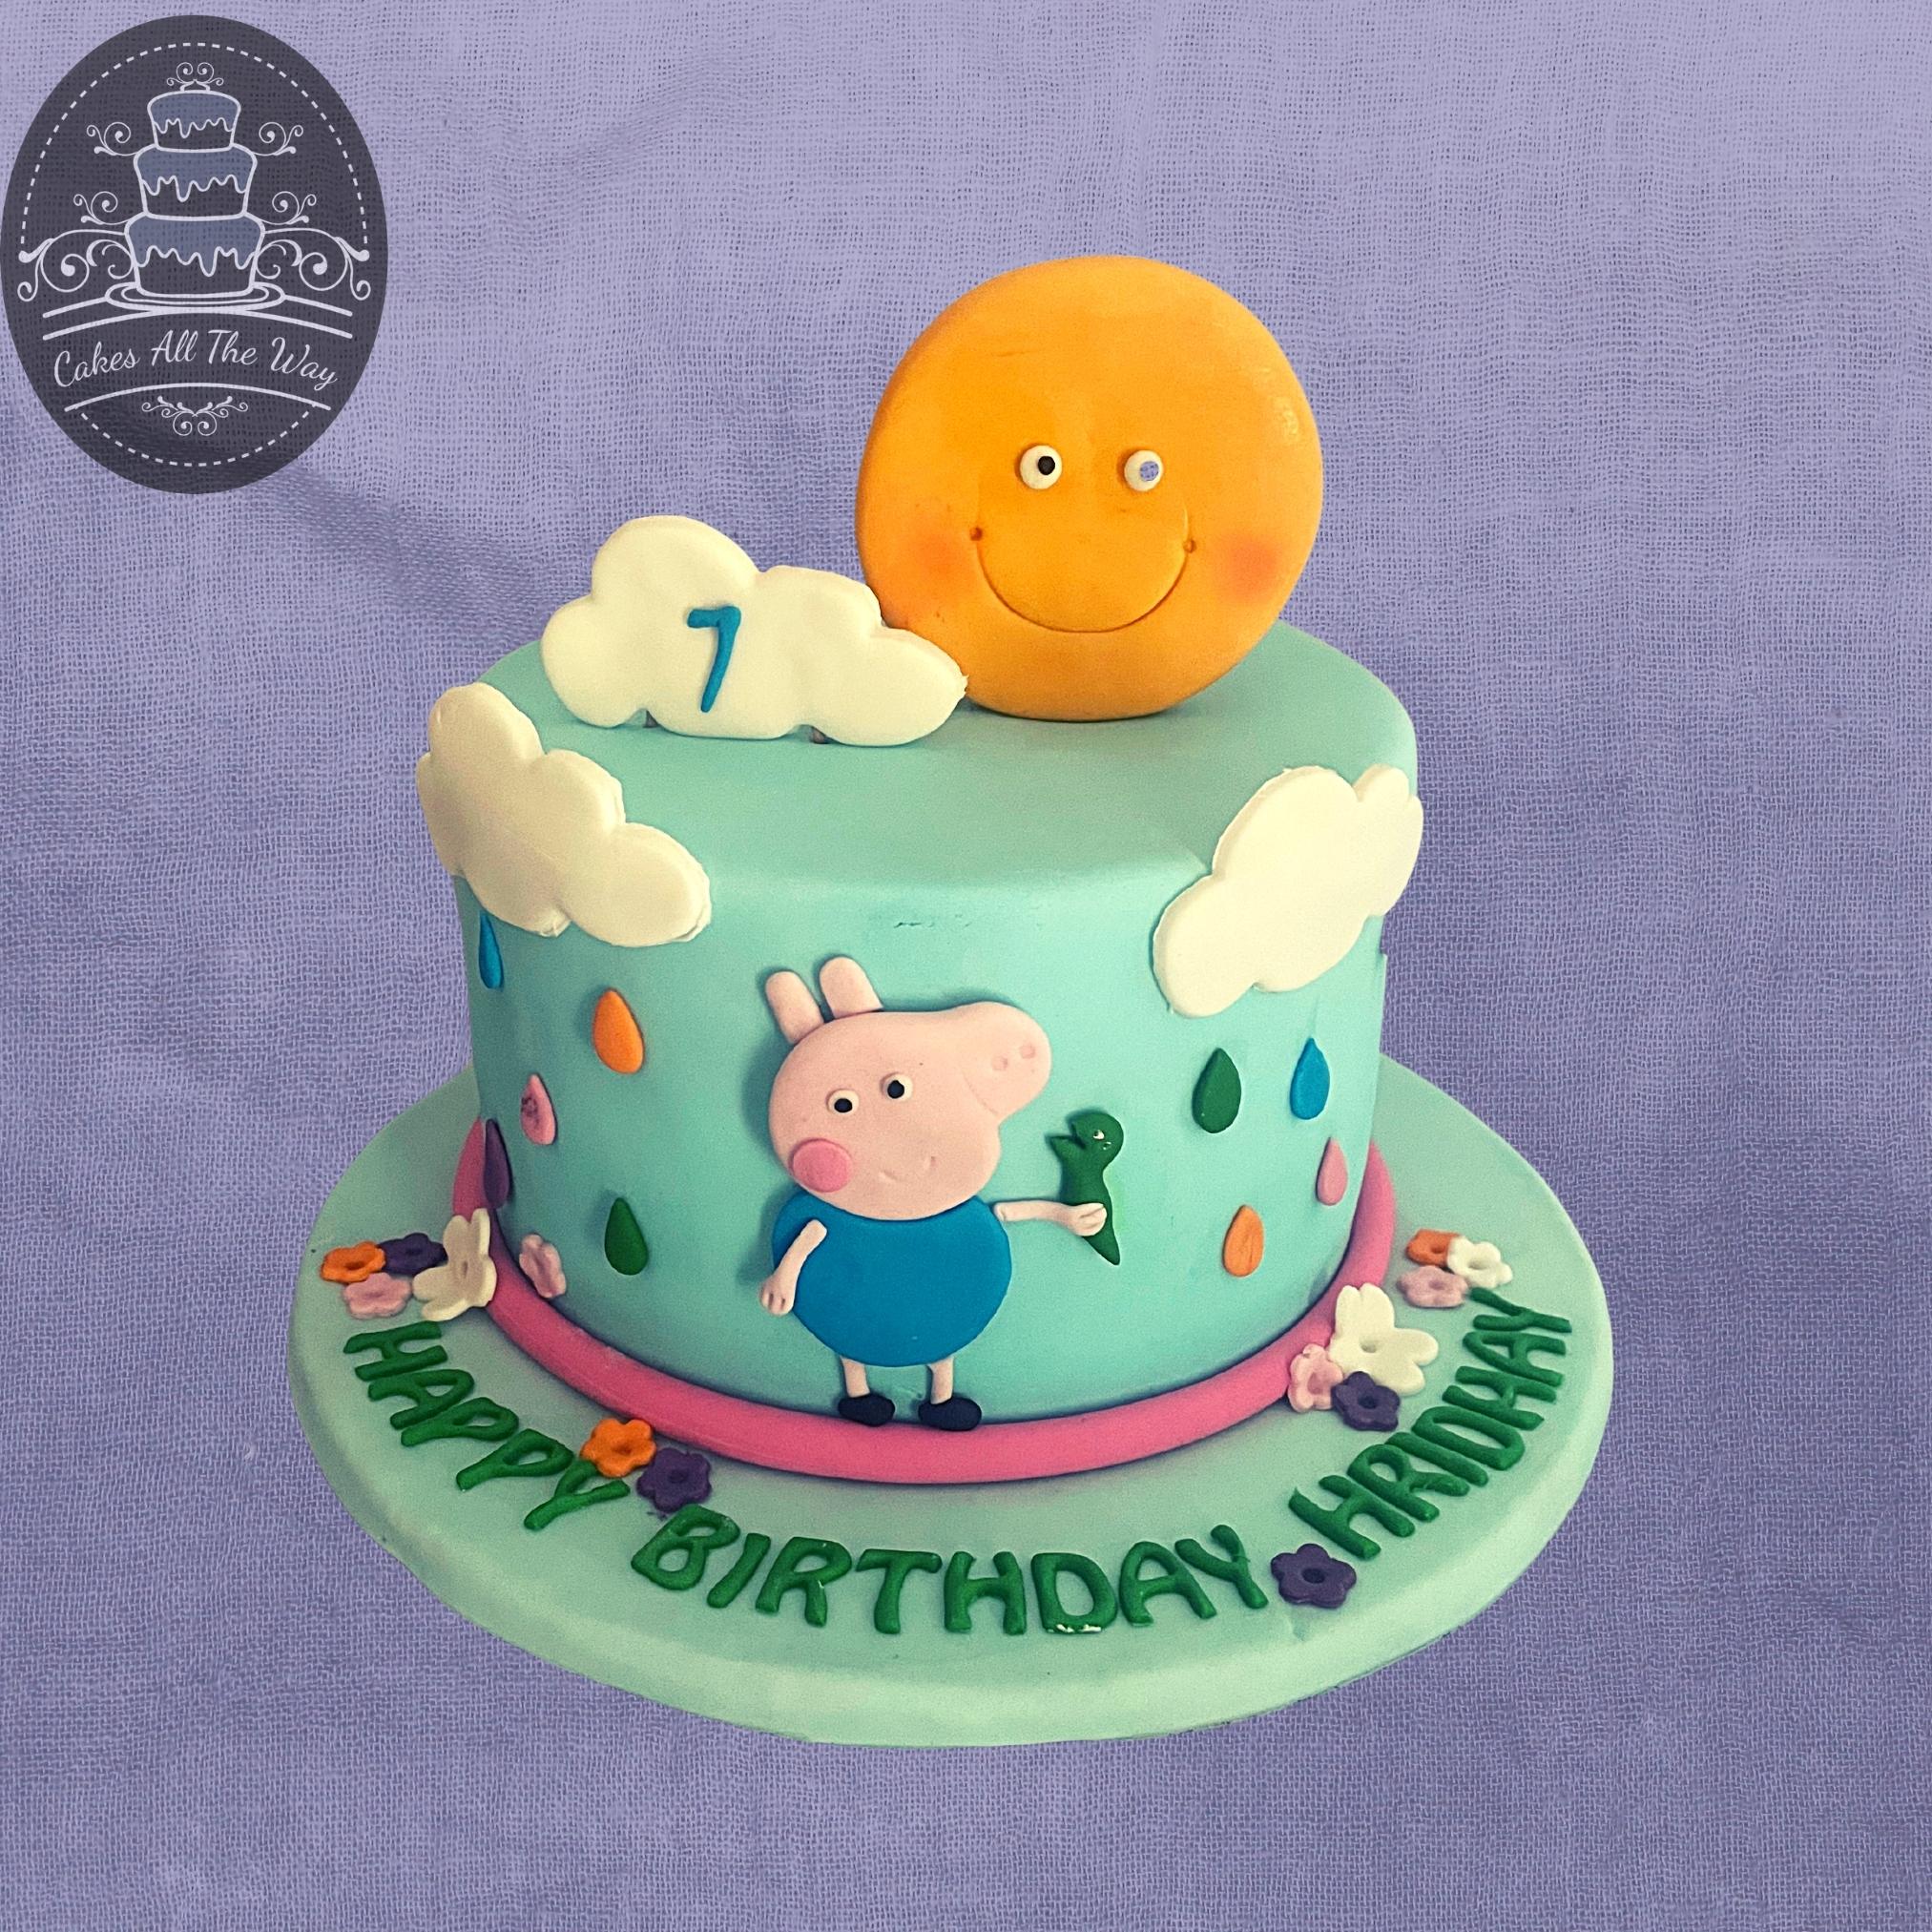 Peppa Pig Birthday Cake | DIY Quick and Easy Cake Recipes - YouTube